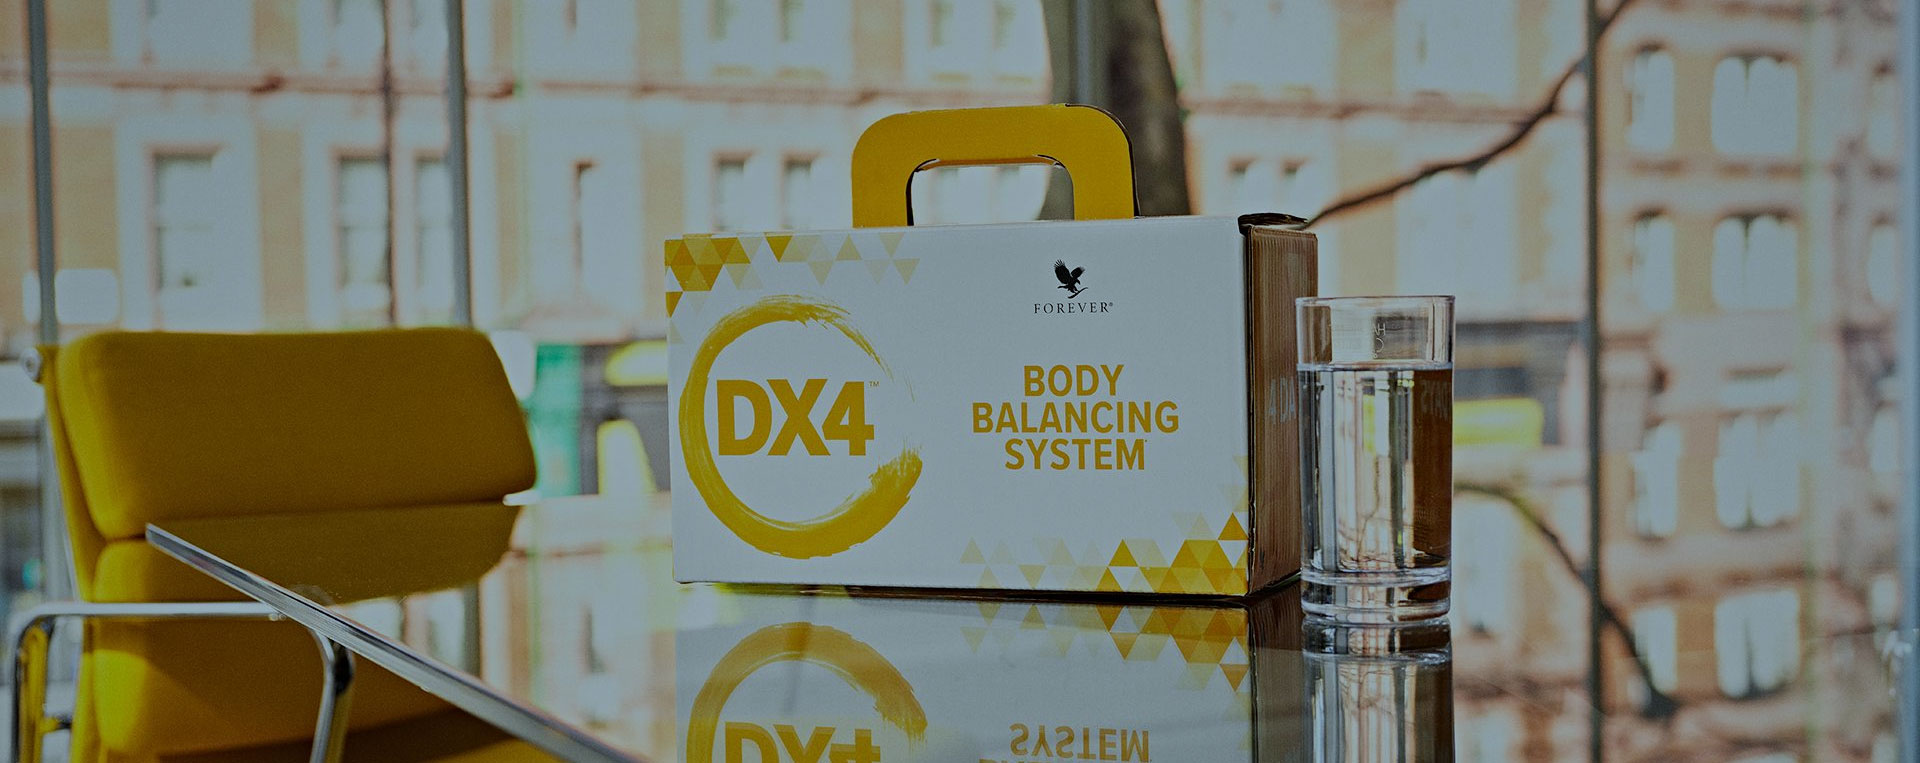 body-ballance-system-dx4-titel1